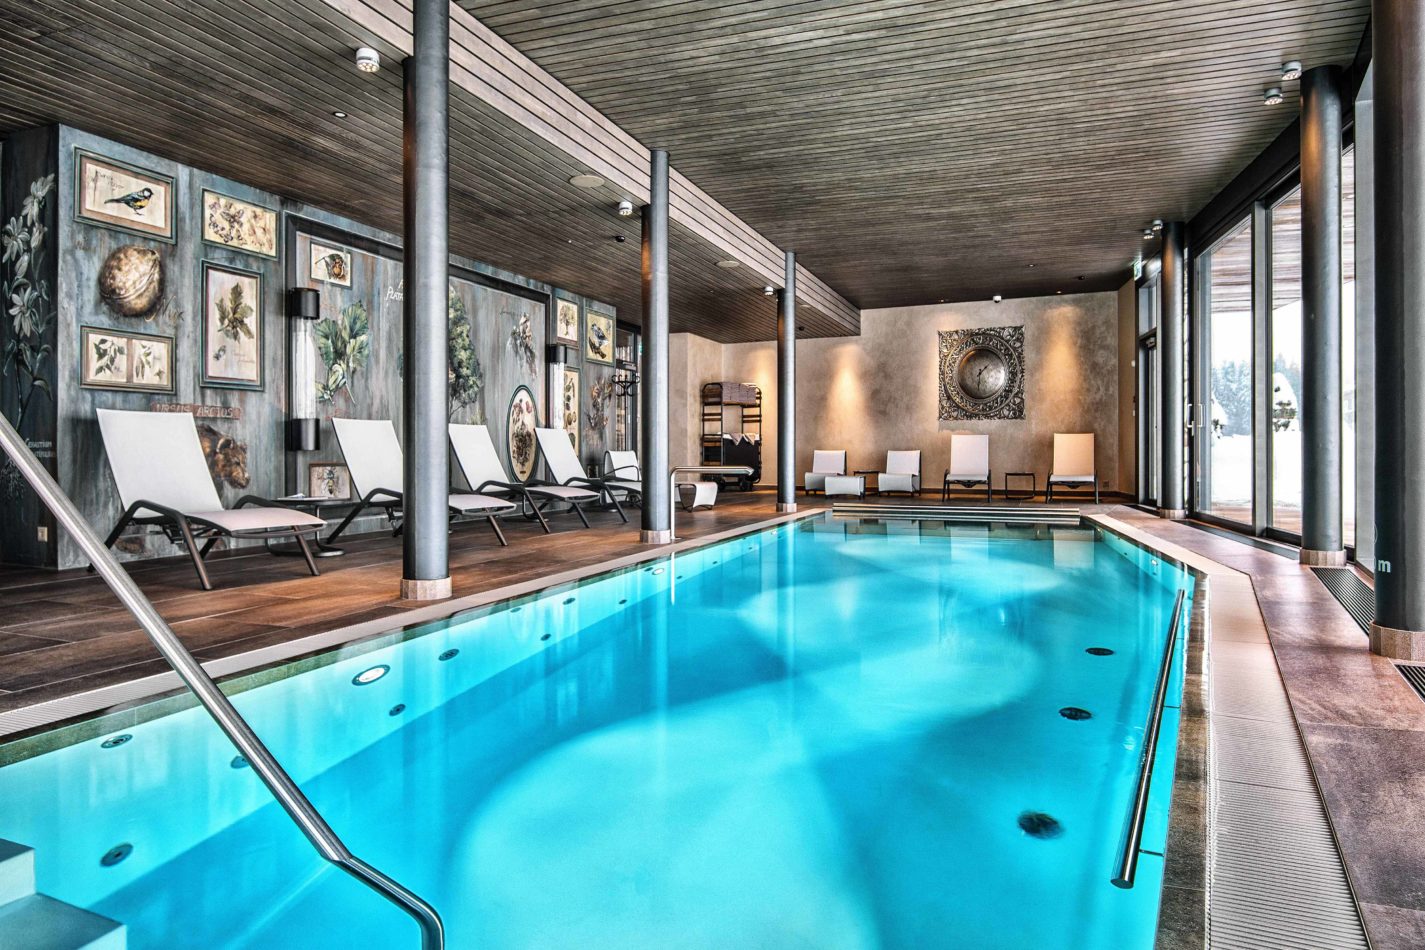 Спа-бассейн в отеле Valsana, Швейцария |  Мистер и миссис Смит